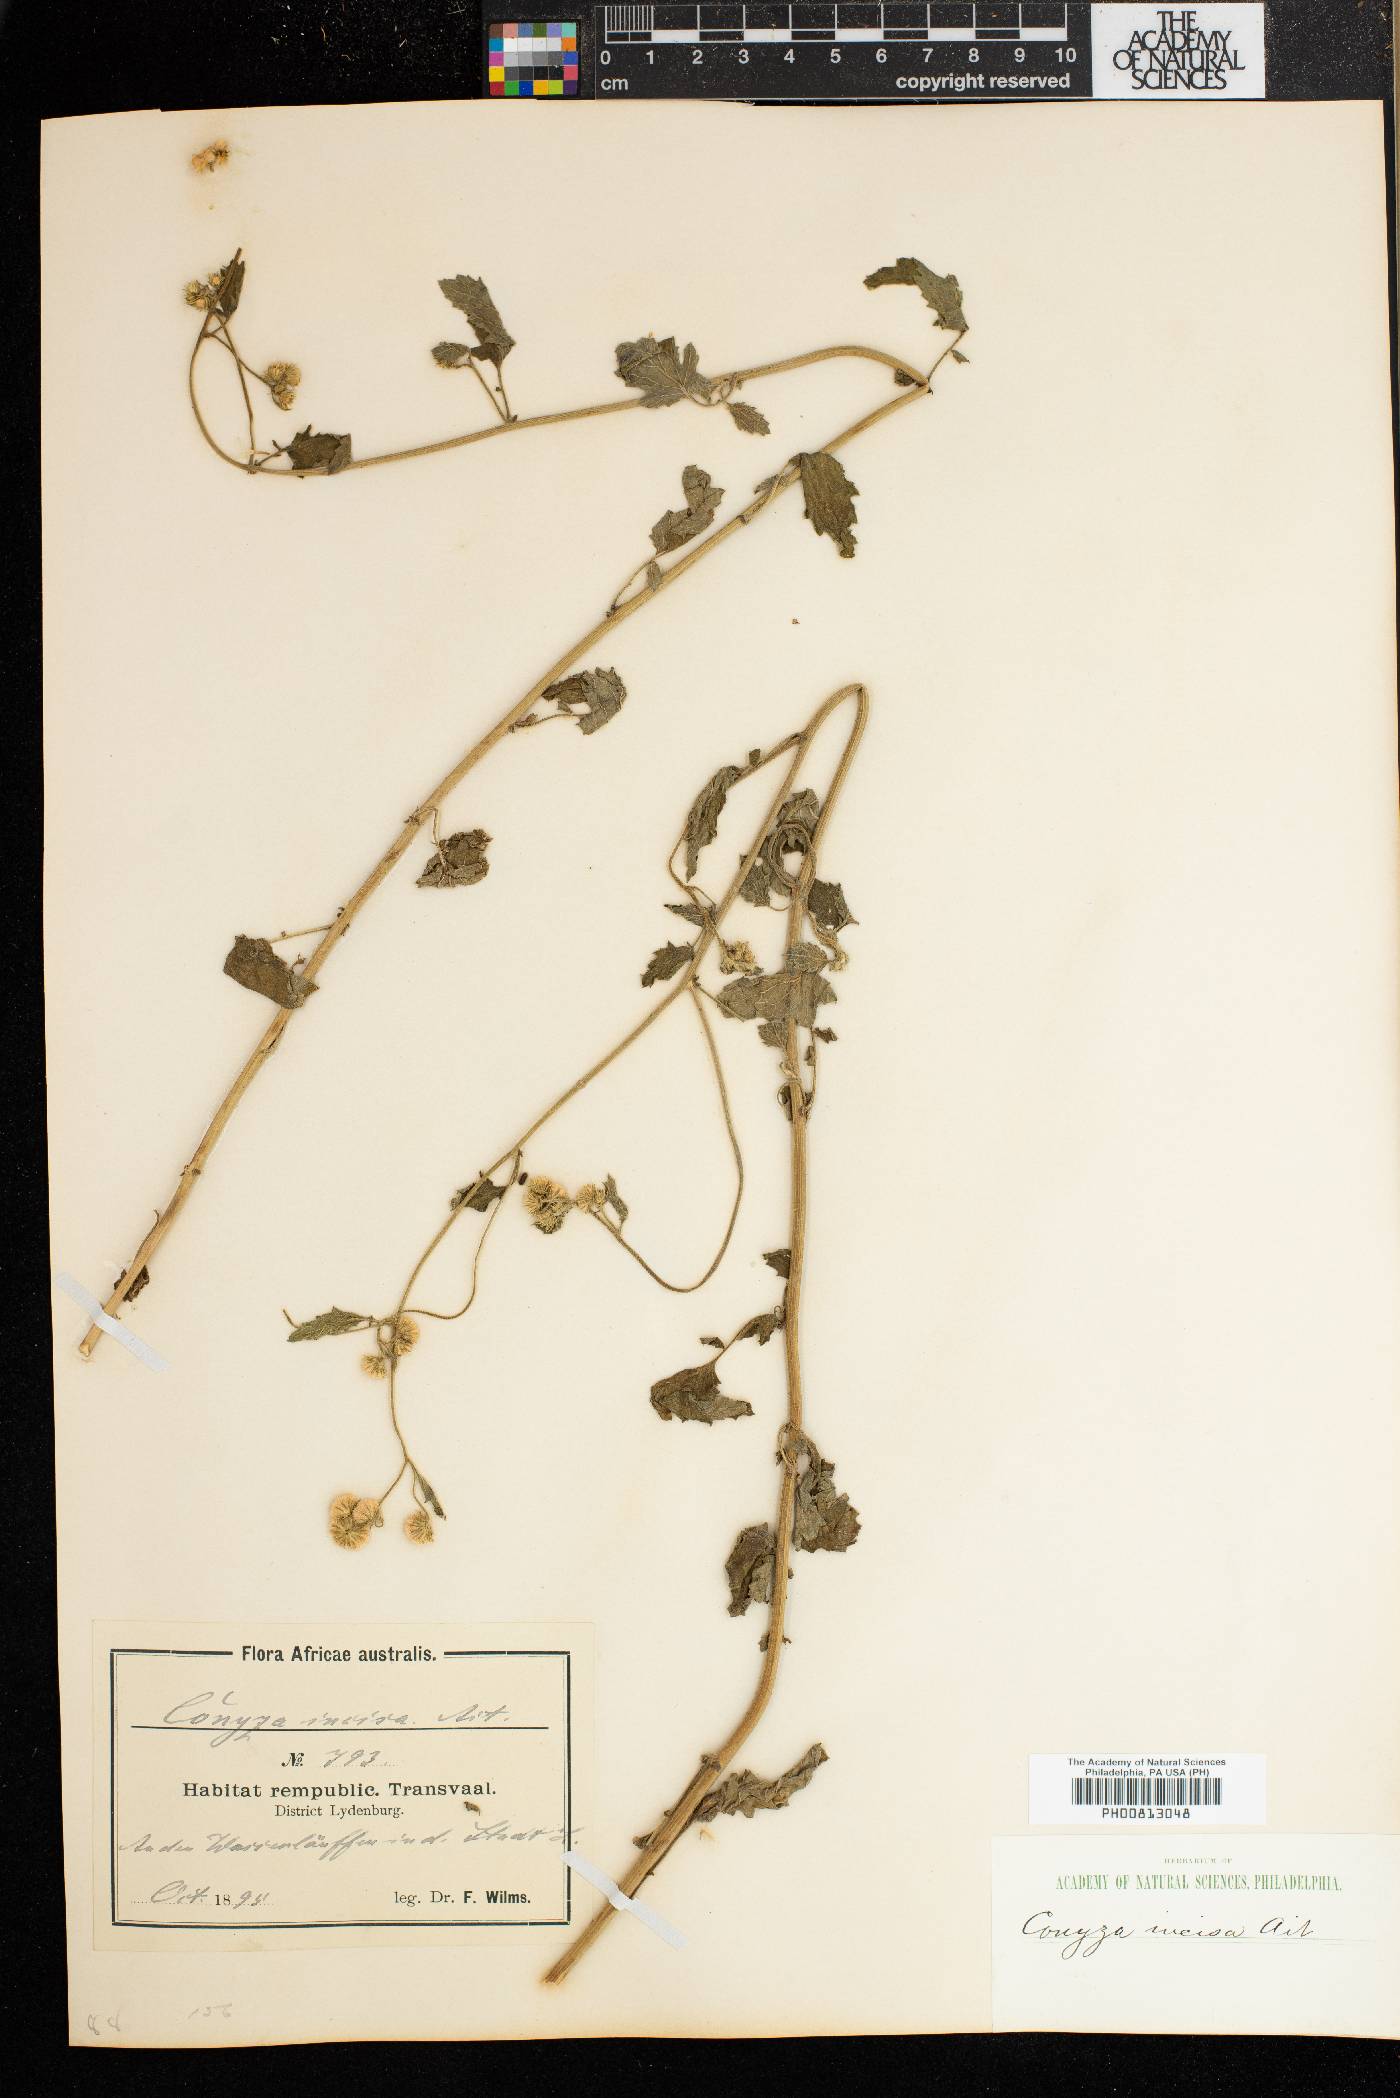 Nidorella ulmifolia image